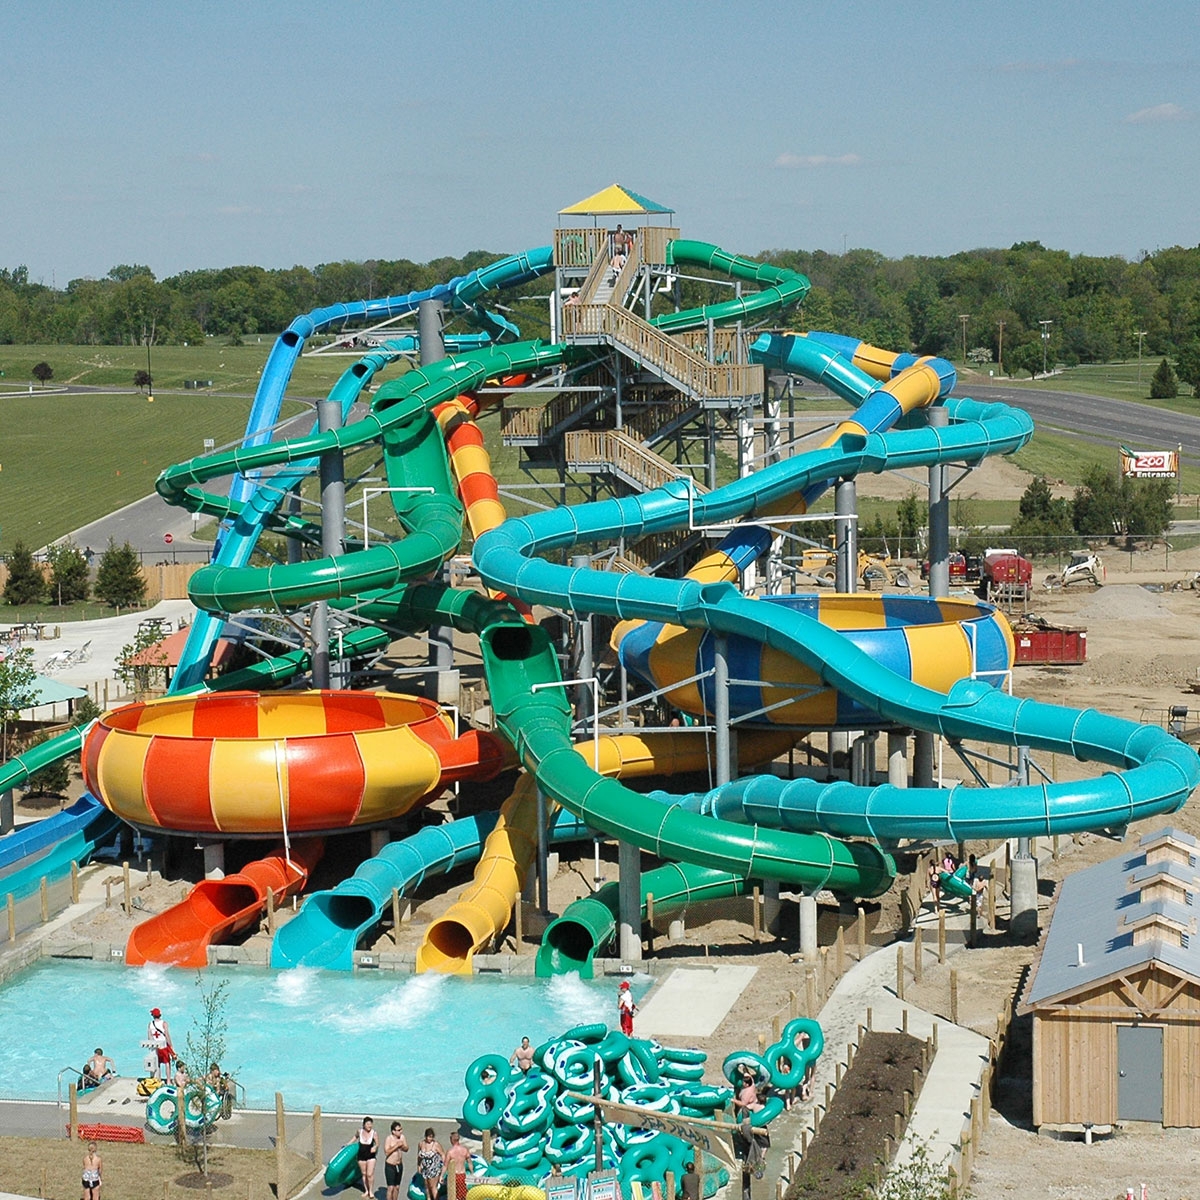 Theme Park Review • Six Flags St. Louis (SFStL) Discussion Thread